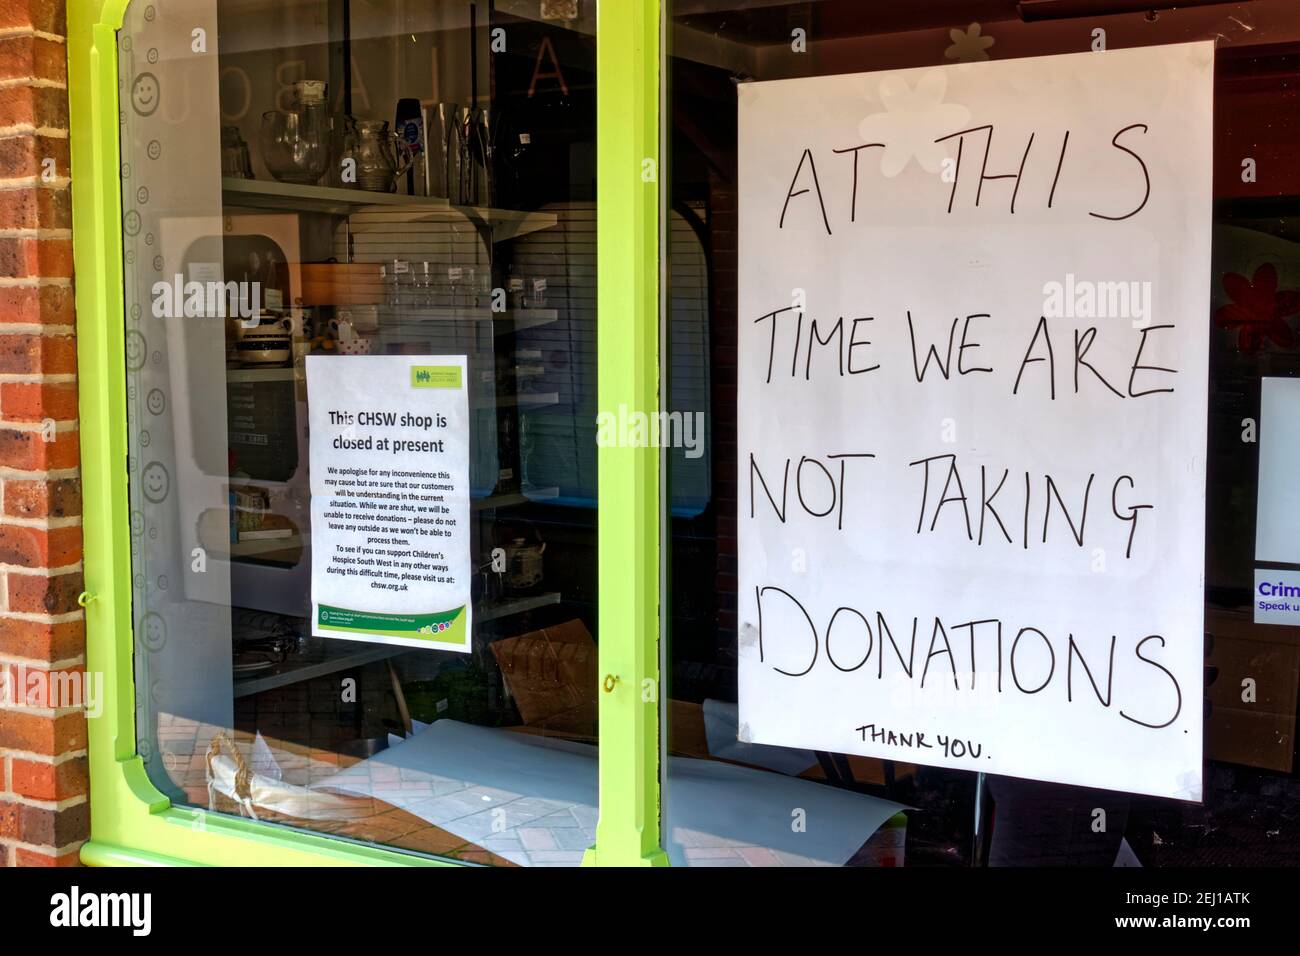 Warminster, Wiltshire / UK - April 22 2020: Kinderhospiz South West Charity Shop ist wegen Covid-19 Coronavirus vorübergehend geschlossen Stockfoto